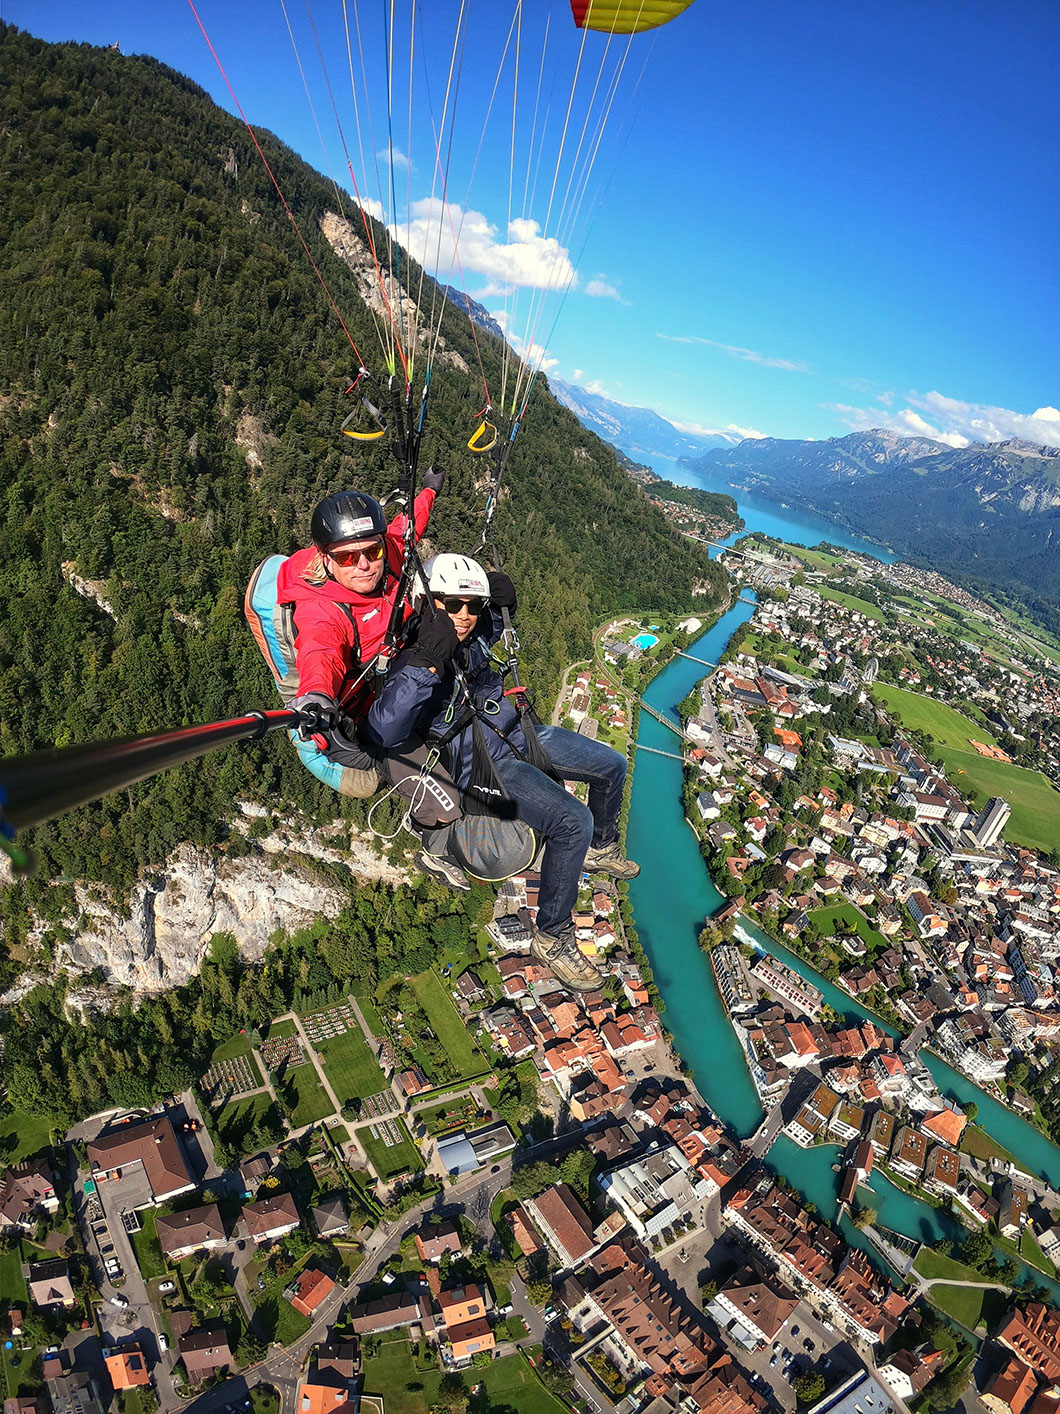 Paragliding experience in Interlaken